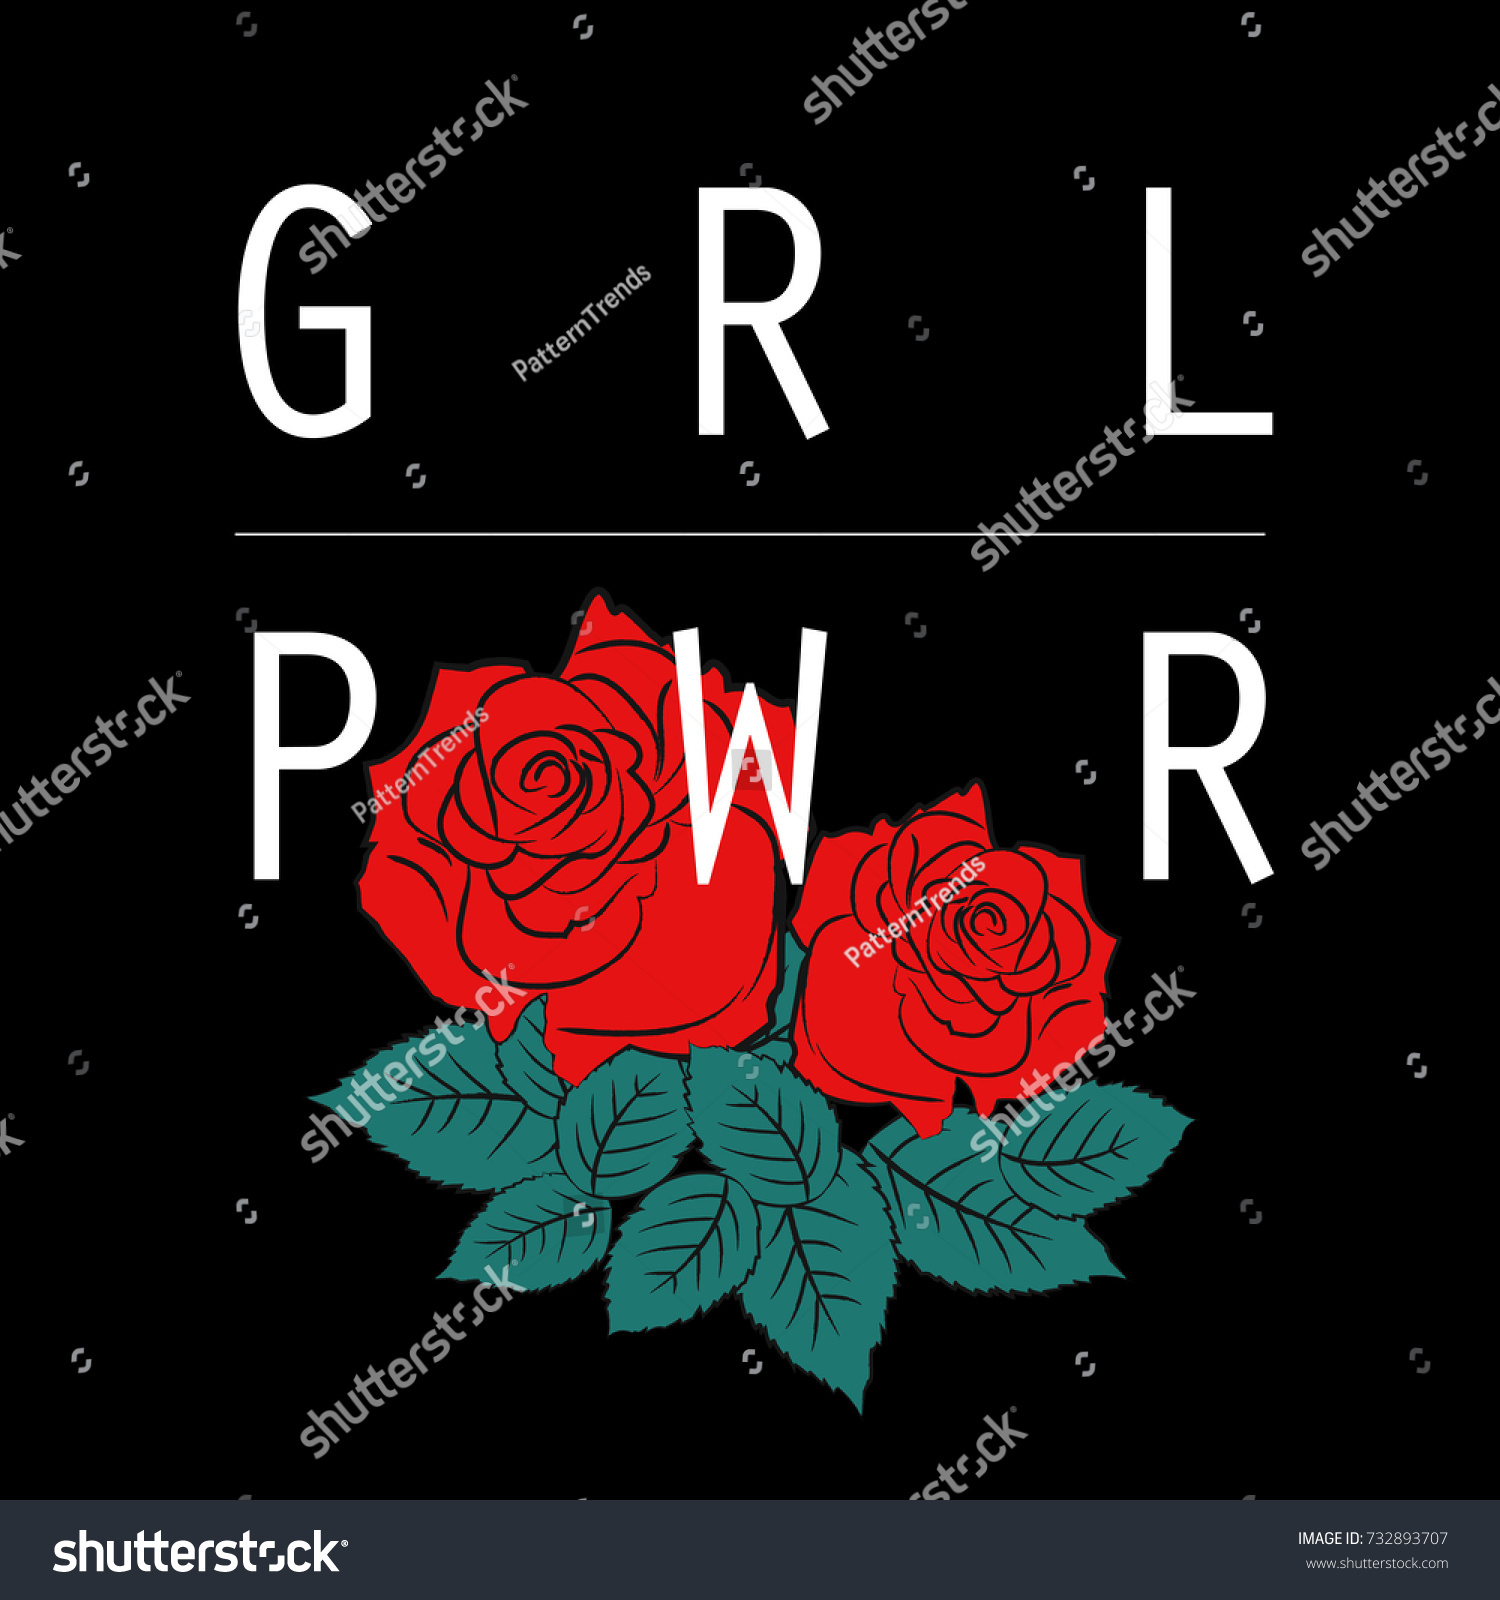 Girl Power Rose Shirt Rldm - roblox abs t shirt id rldm